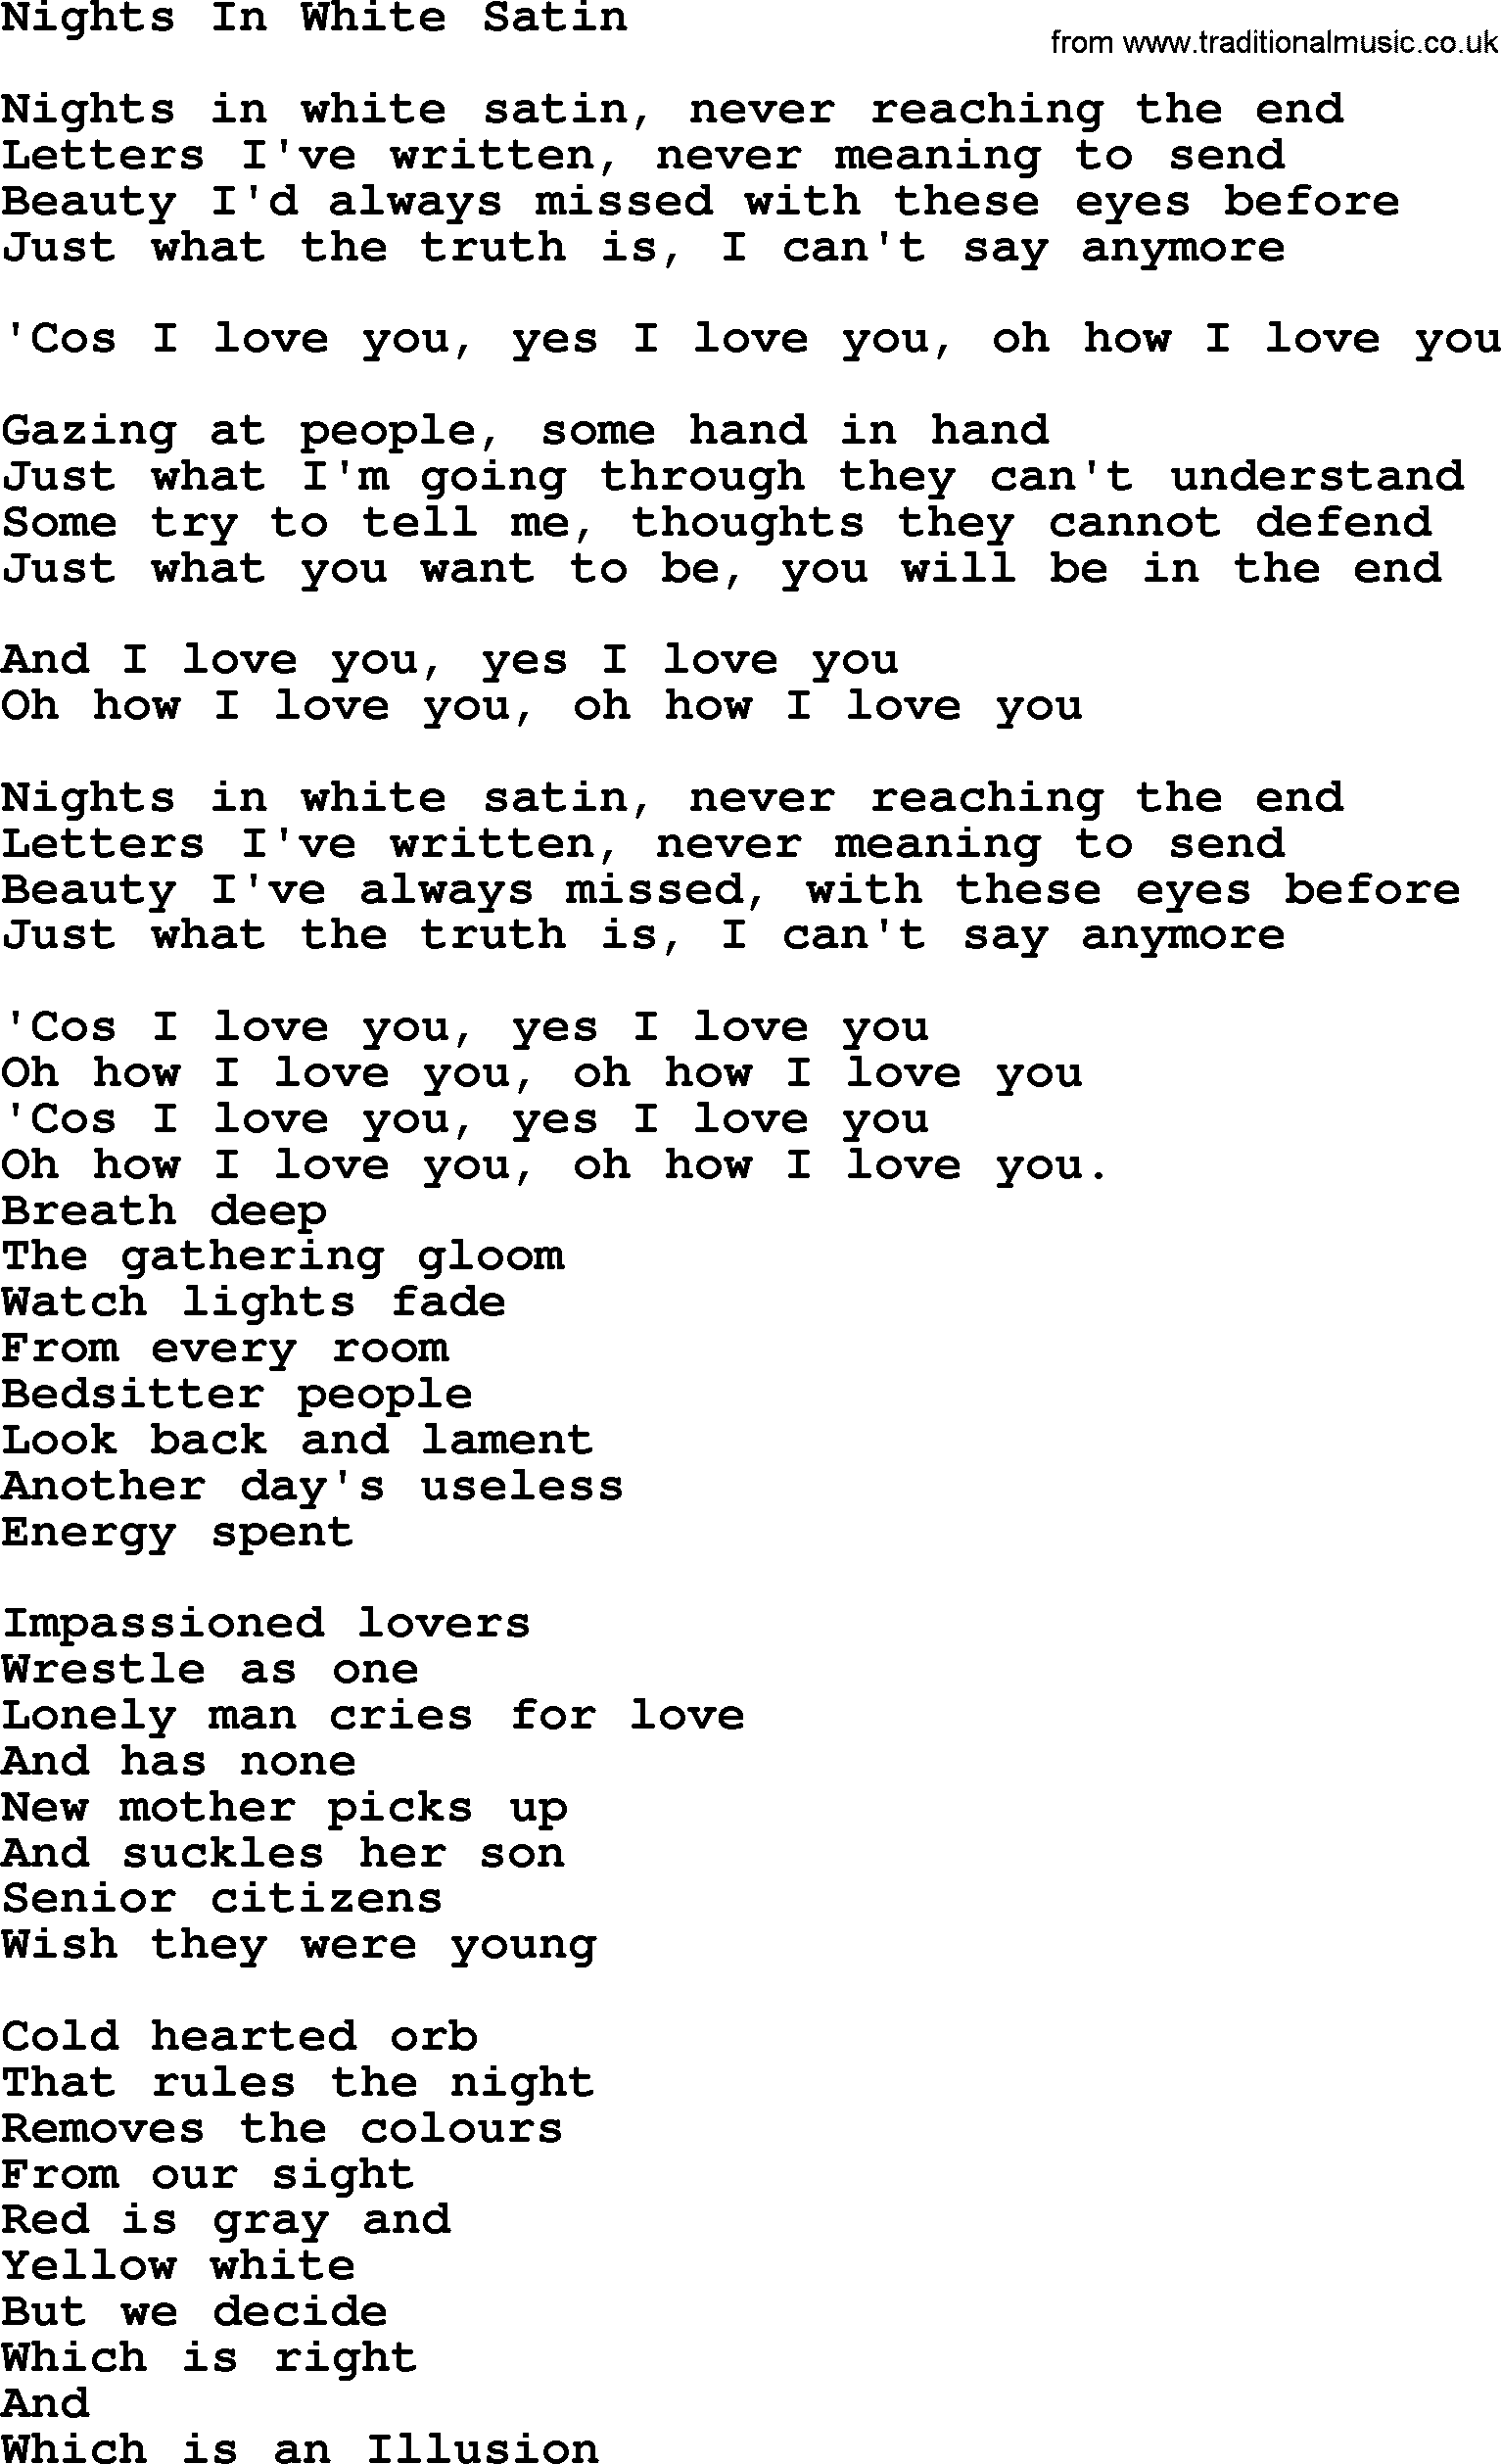 The Byrds song Nights In White Satin, lyrics